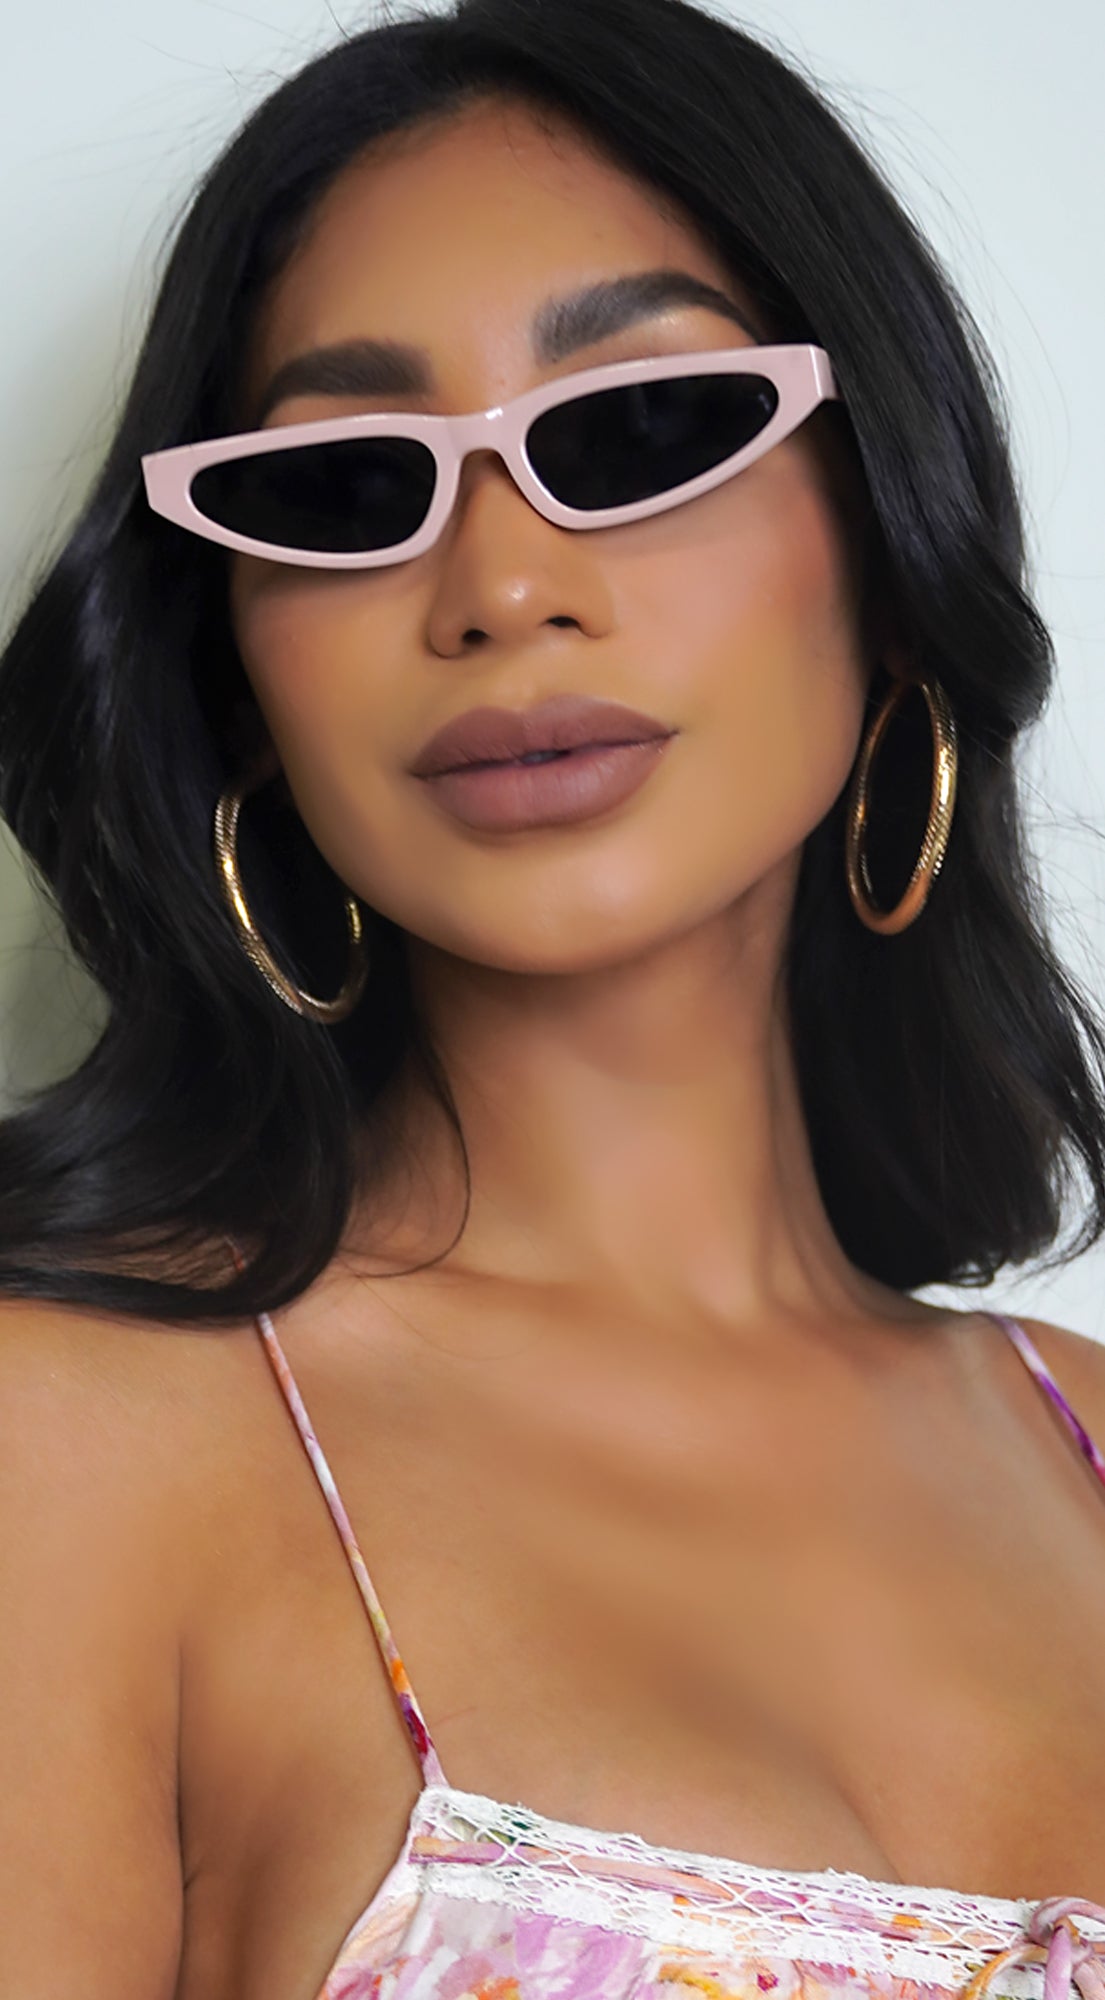 Mina Sunglasses - Pink